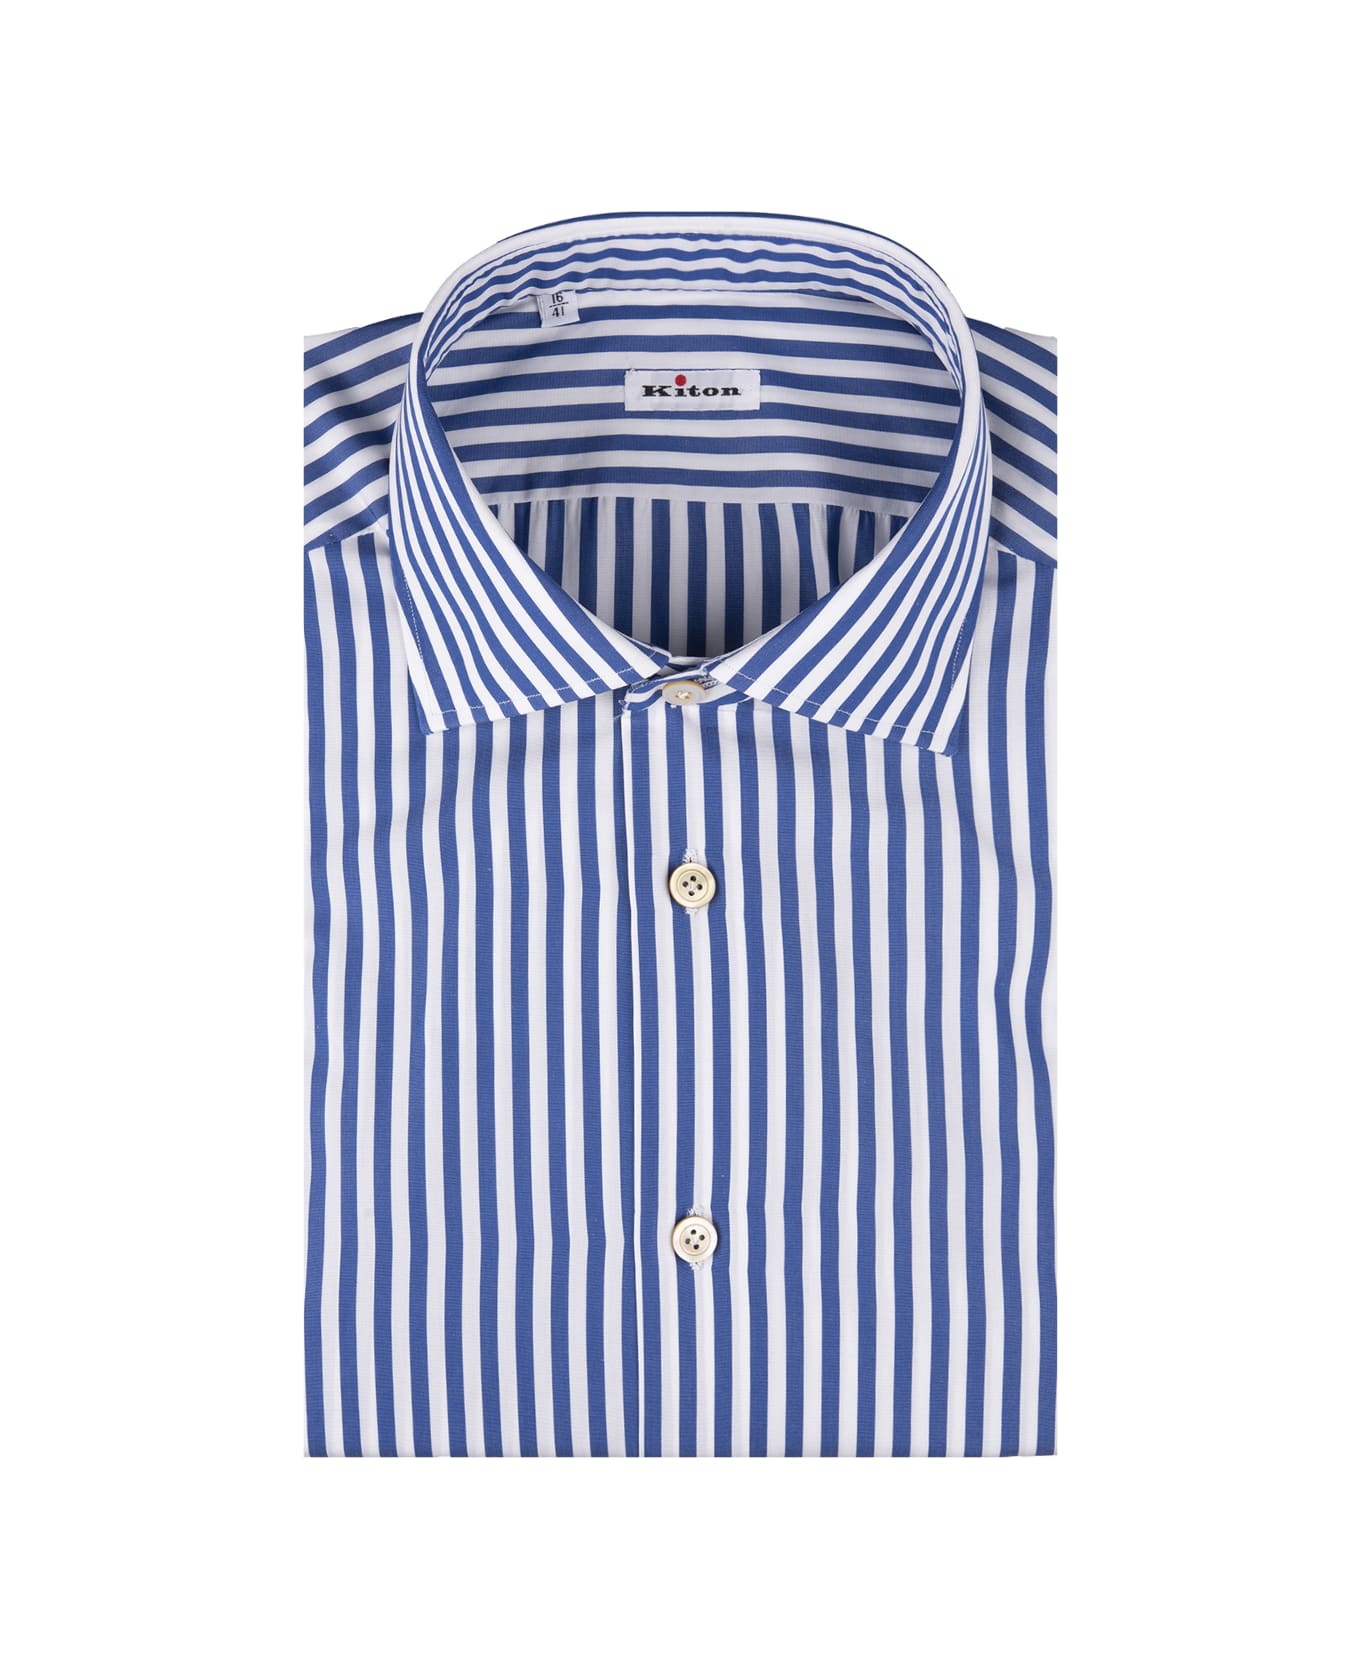 Kiton Blue And White Striped Poplin Shirt - Blue